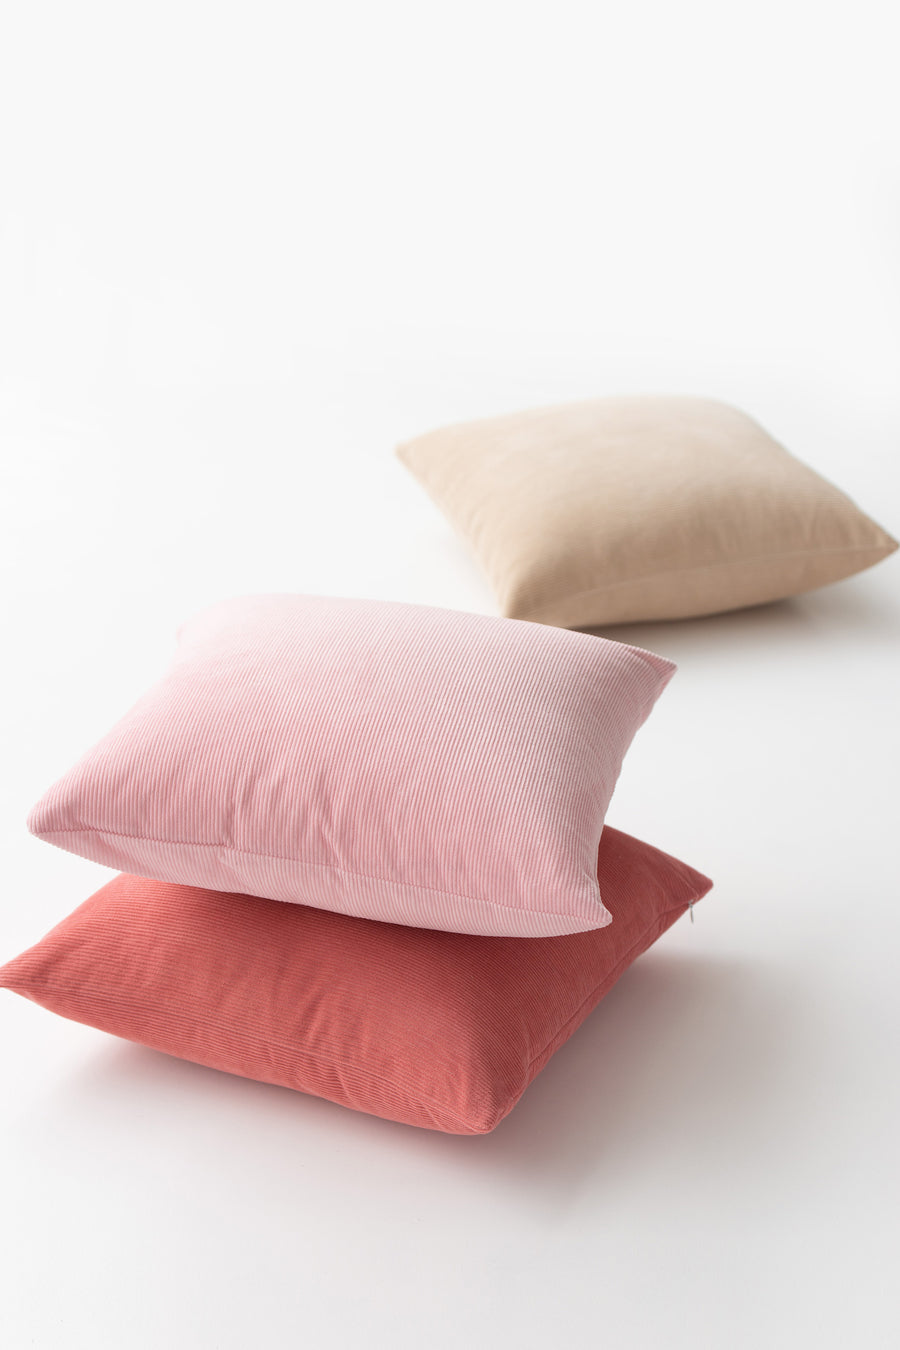 Modern Pillow Cover, Corduroy, Camel, 18